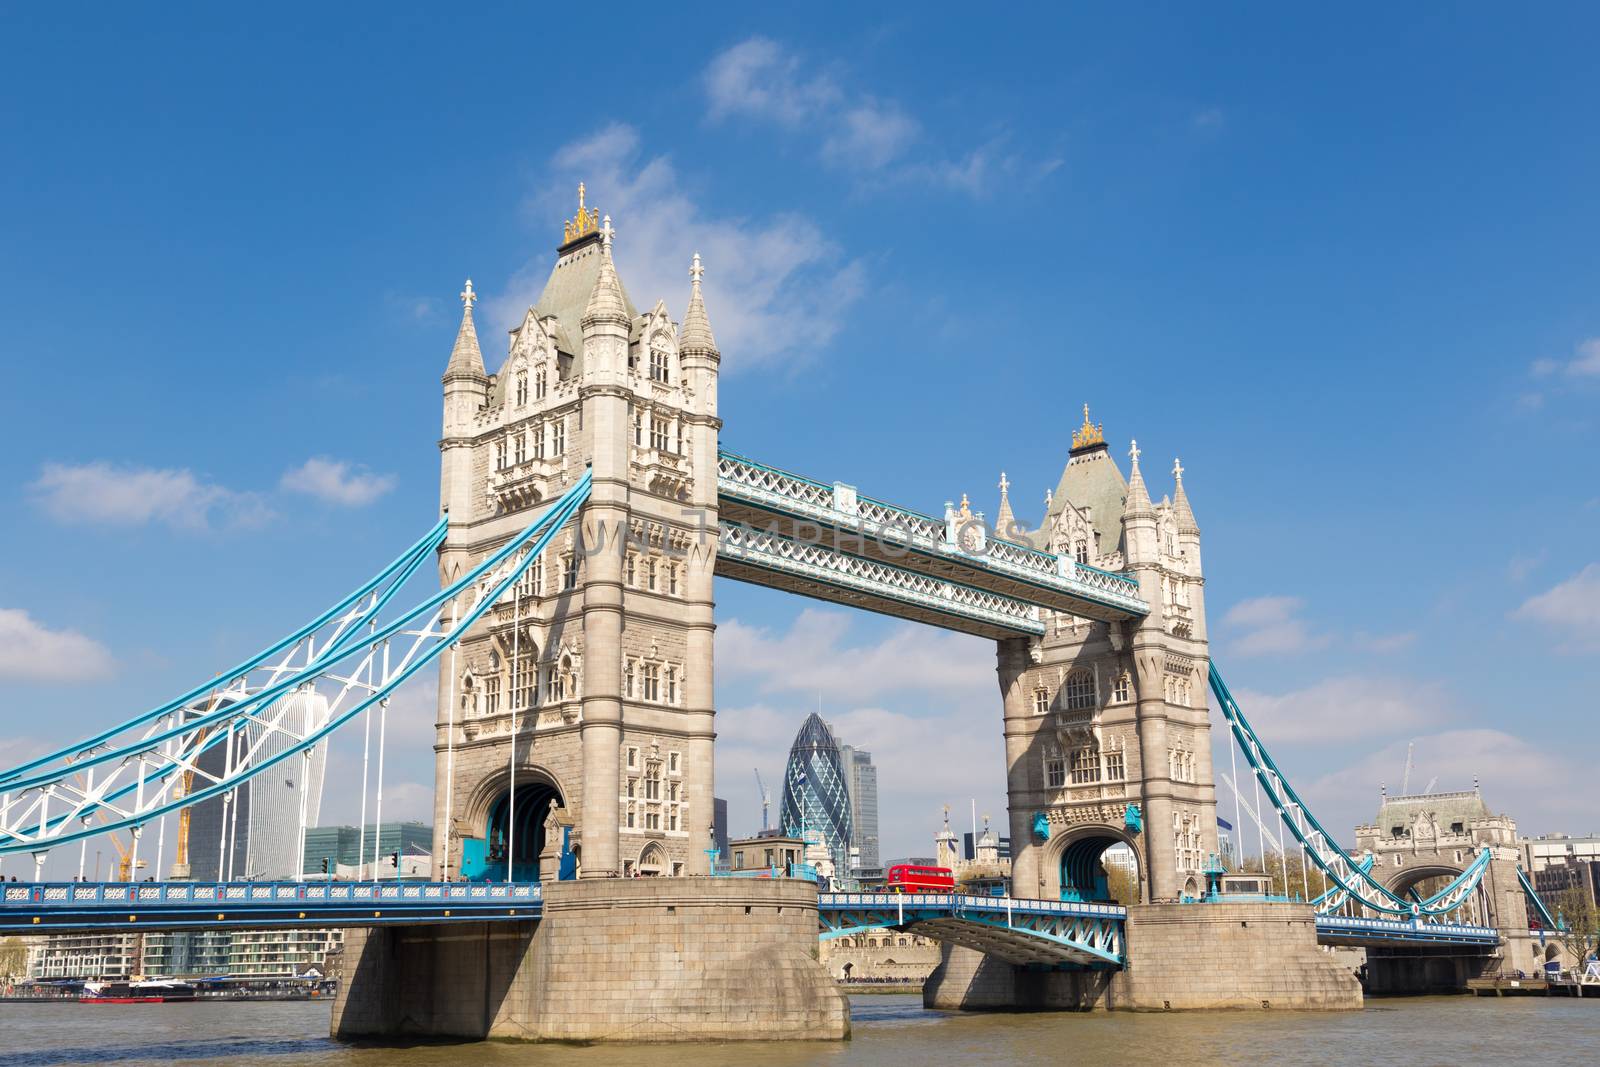 Tower Bridge in London, UK by kasto